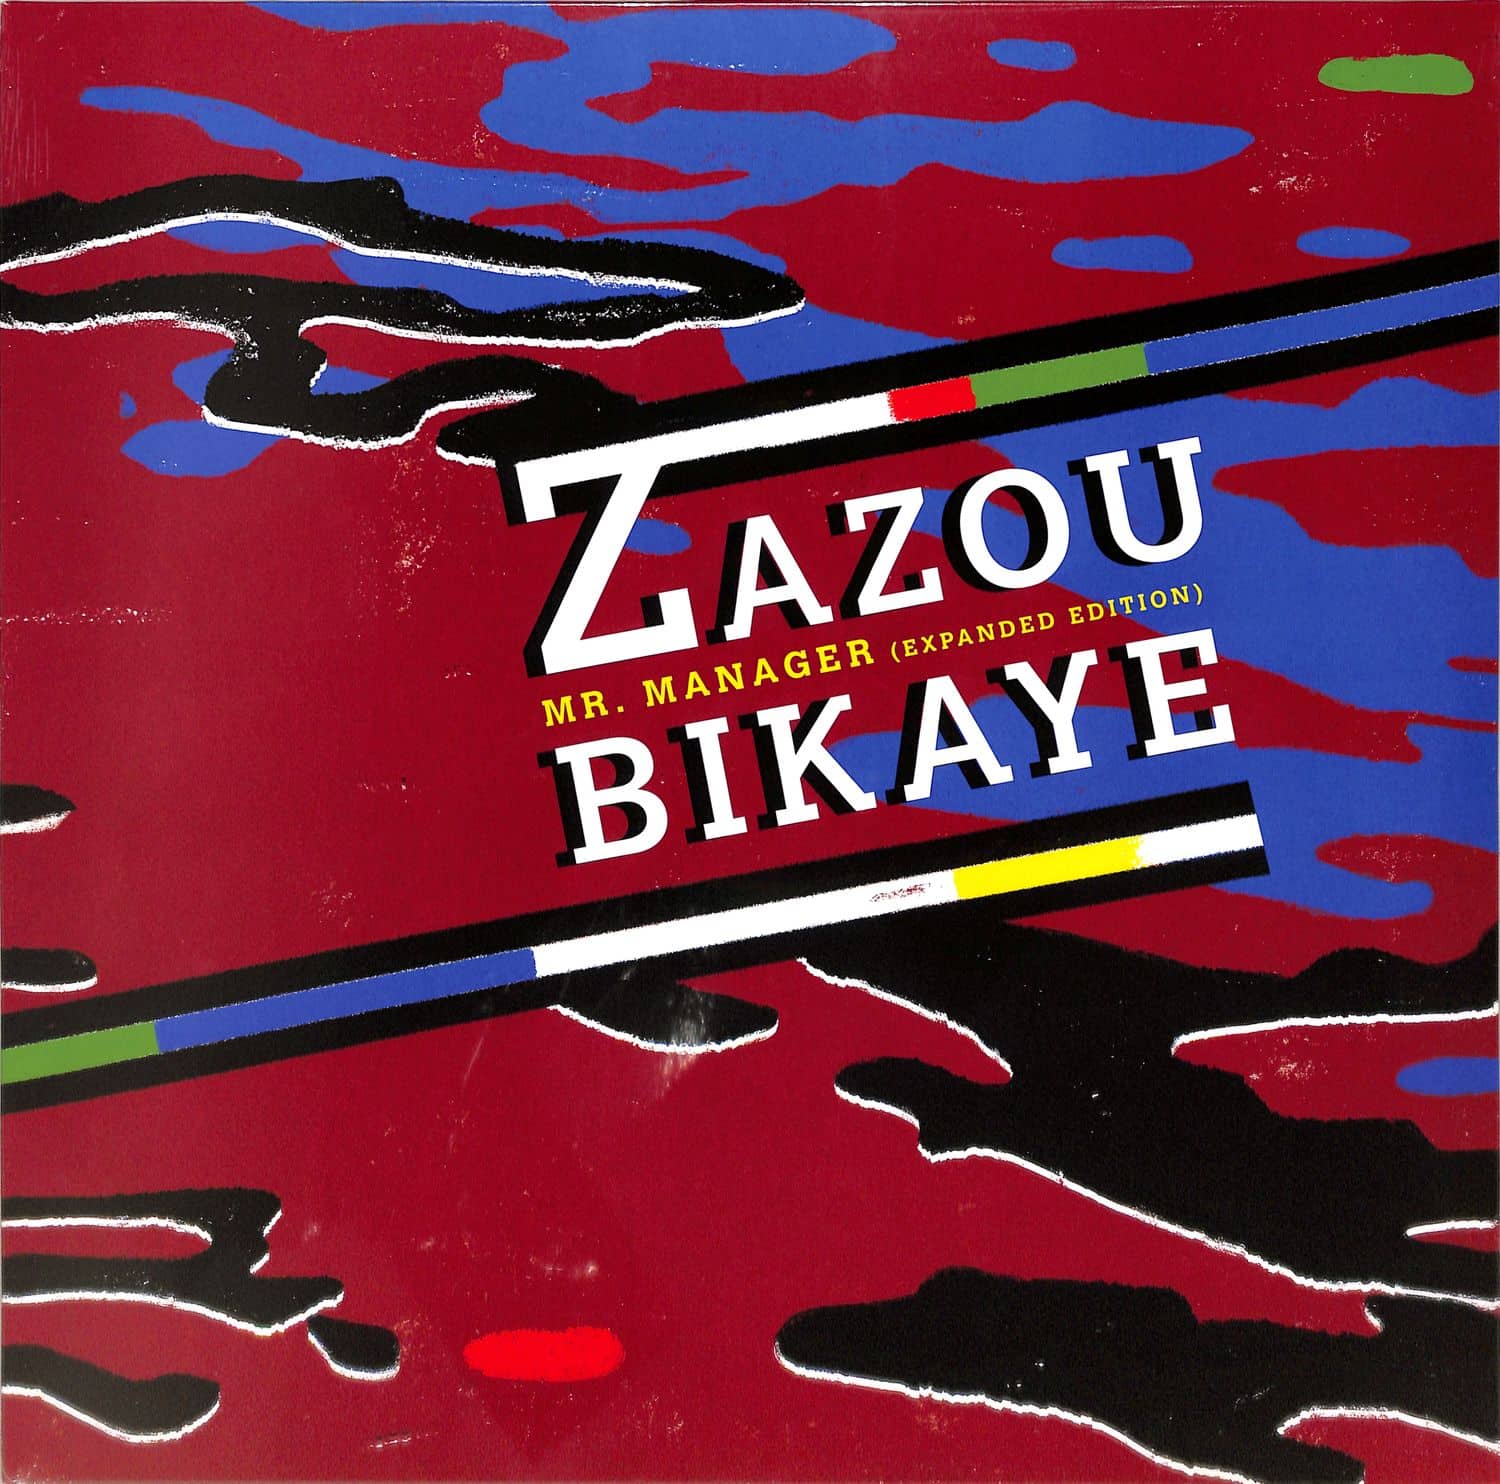 Zazou Bikaye - MR. MANAGER 